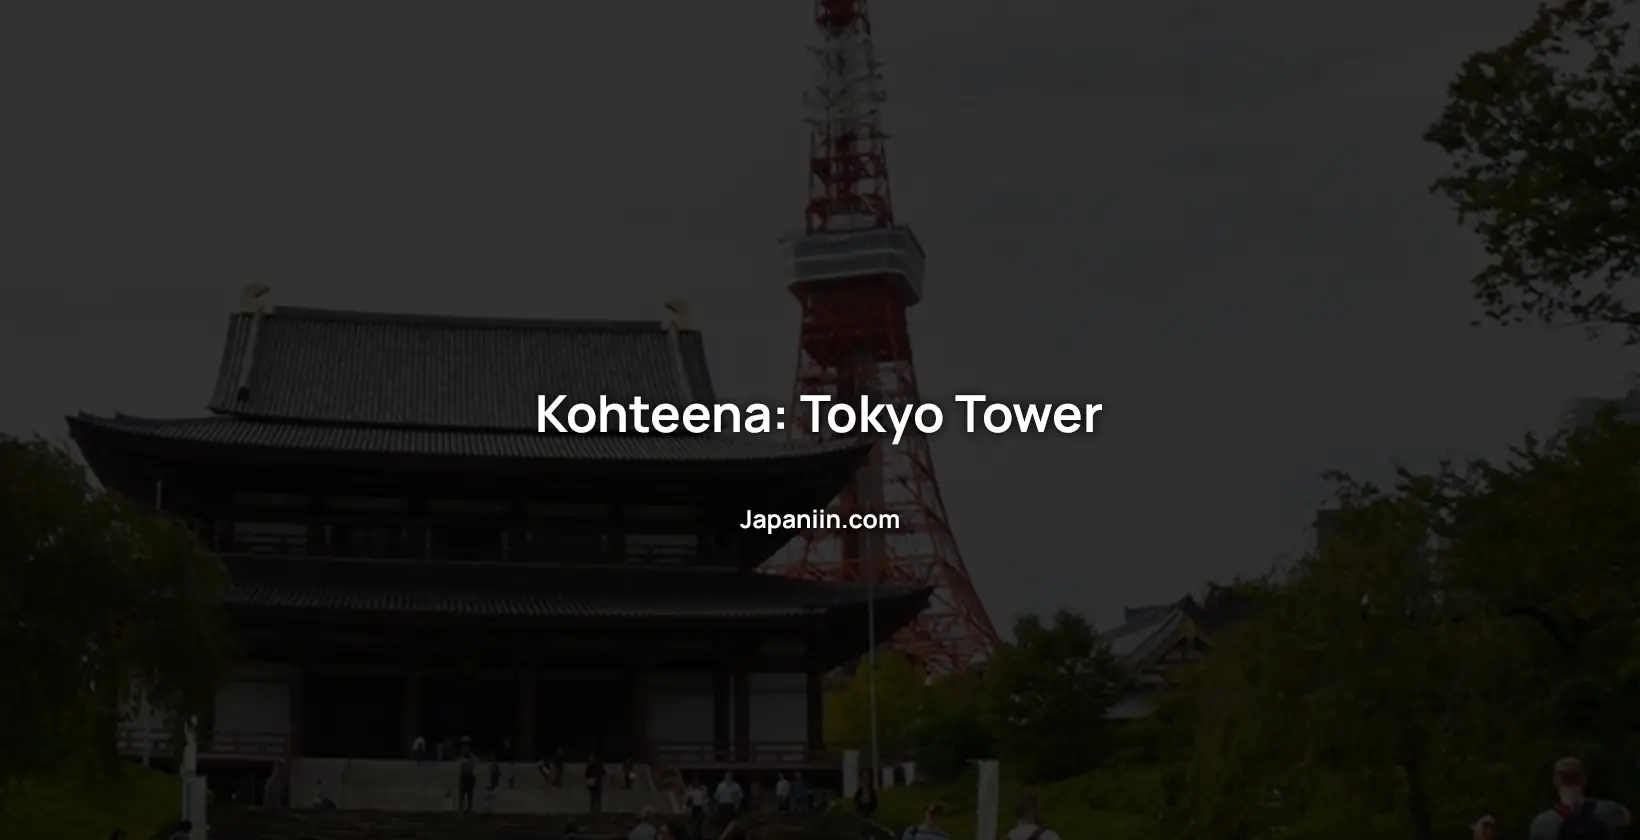 Kohteena tokyo tower